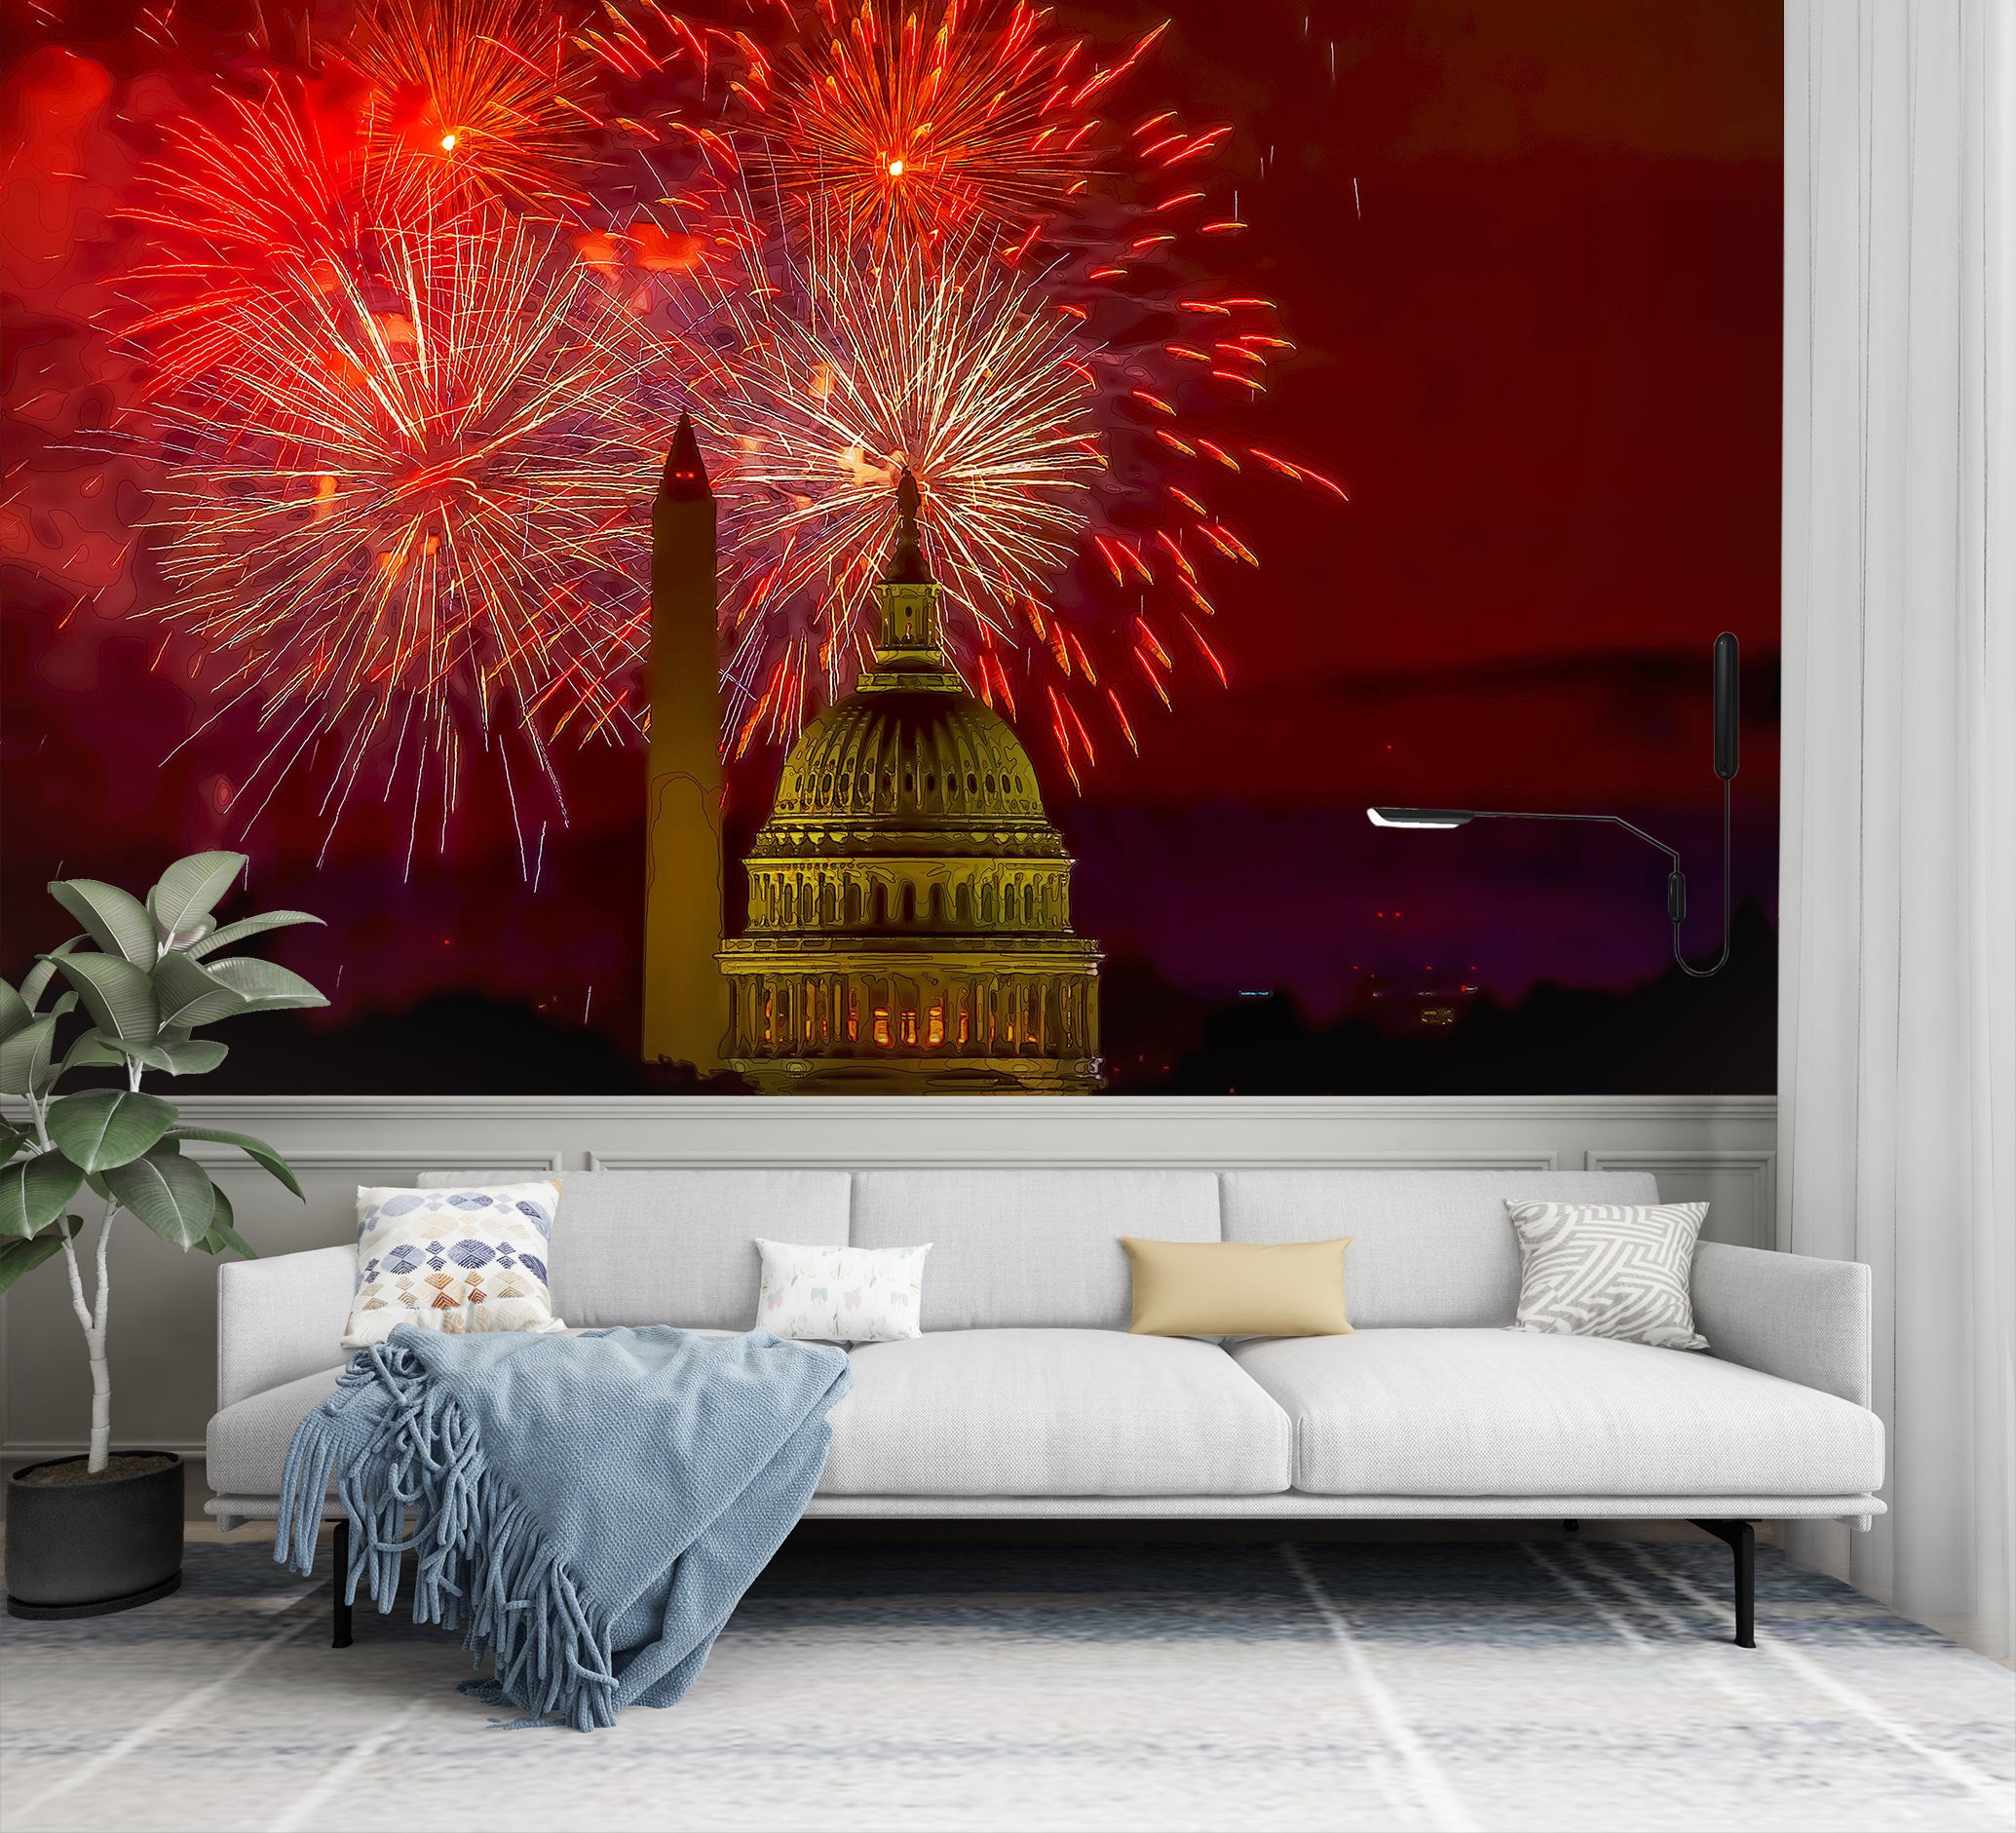 3D Red Fireworks 10884 Alius Herb Wall Mural Wall Murals